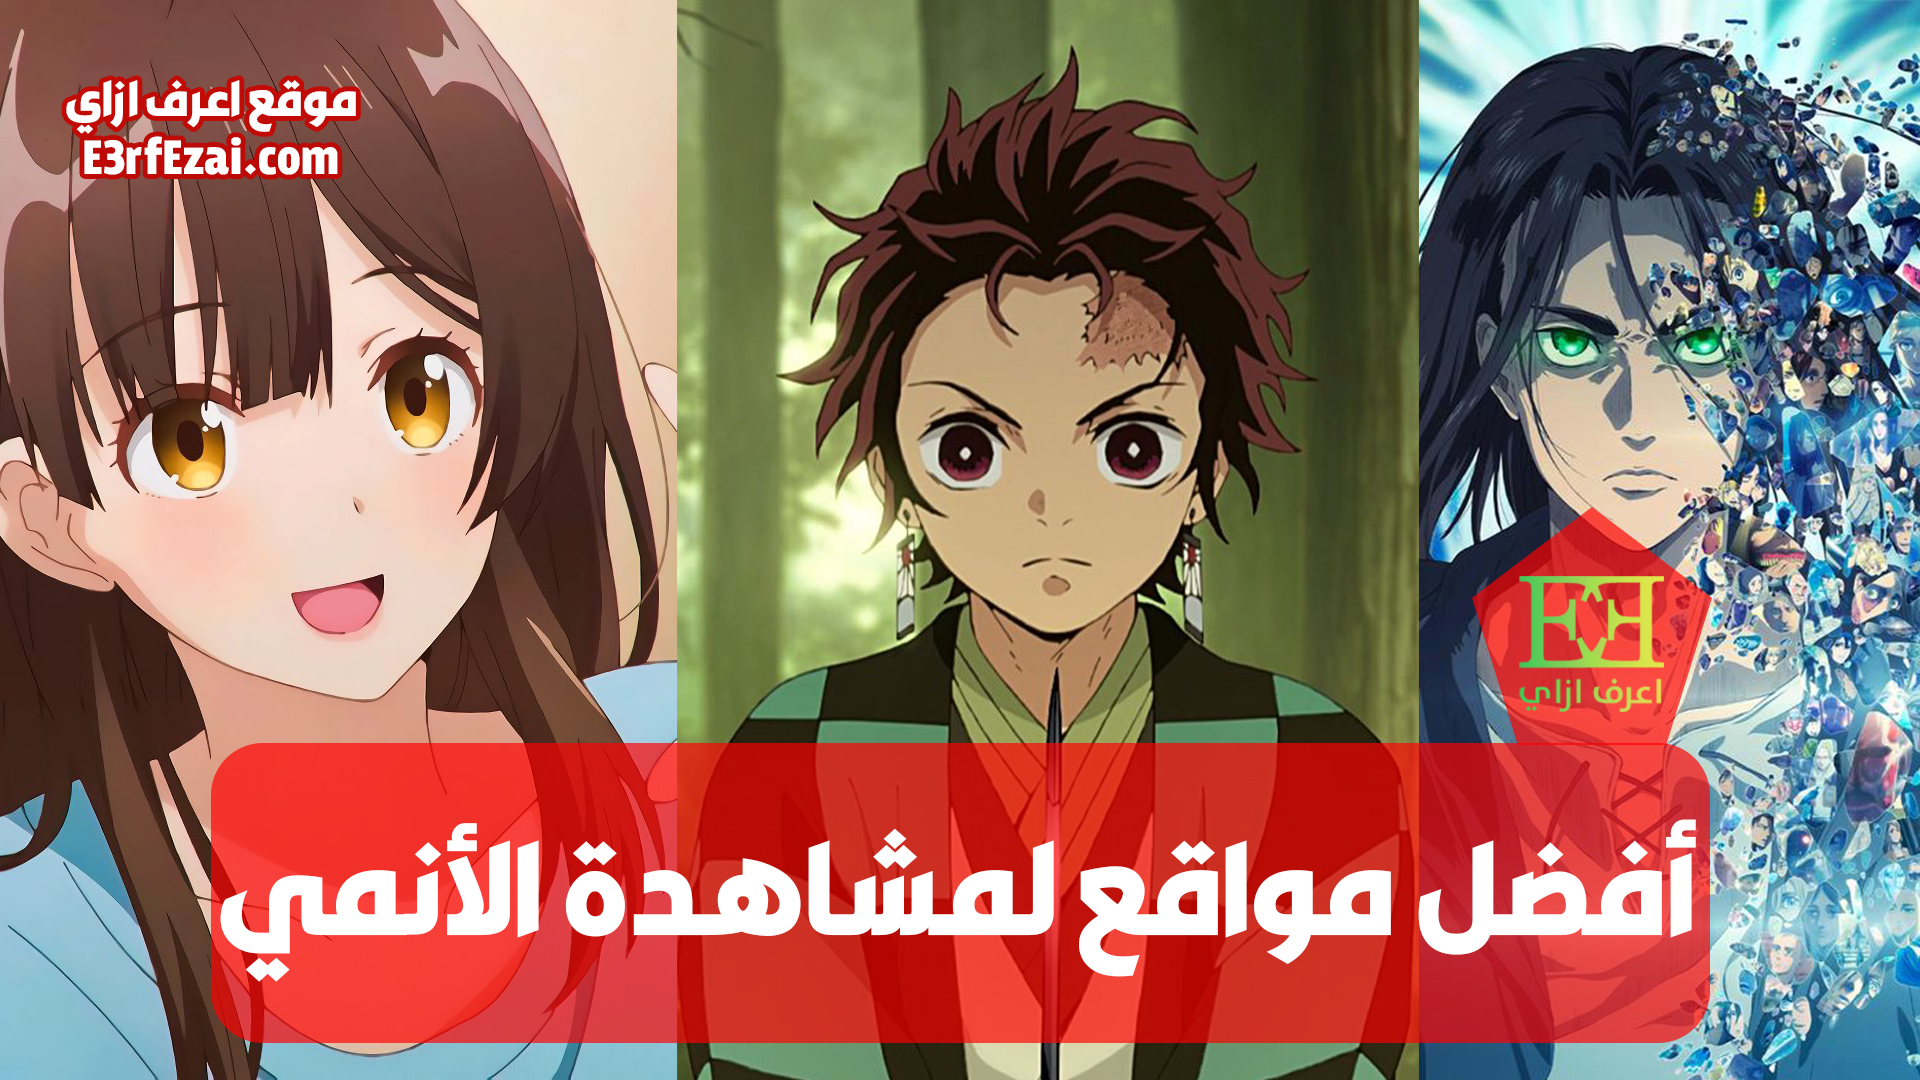 Shahiid Anime – تحميل ومشاهدة الانمي المترجم اون لاين Shahiid Anime